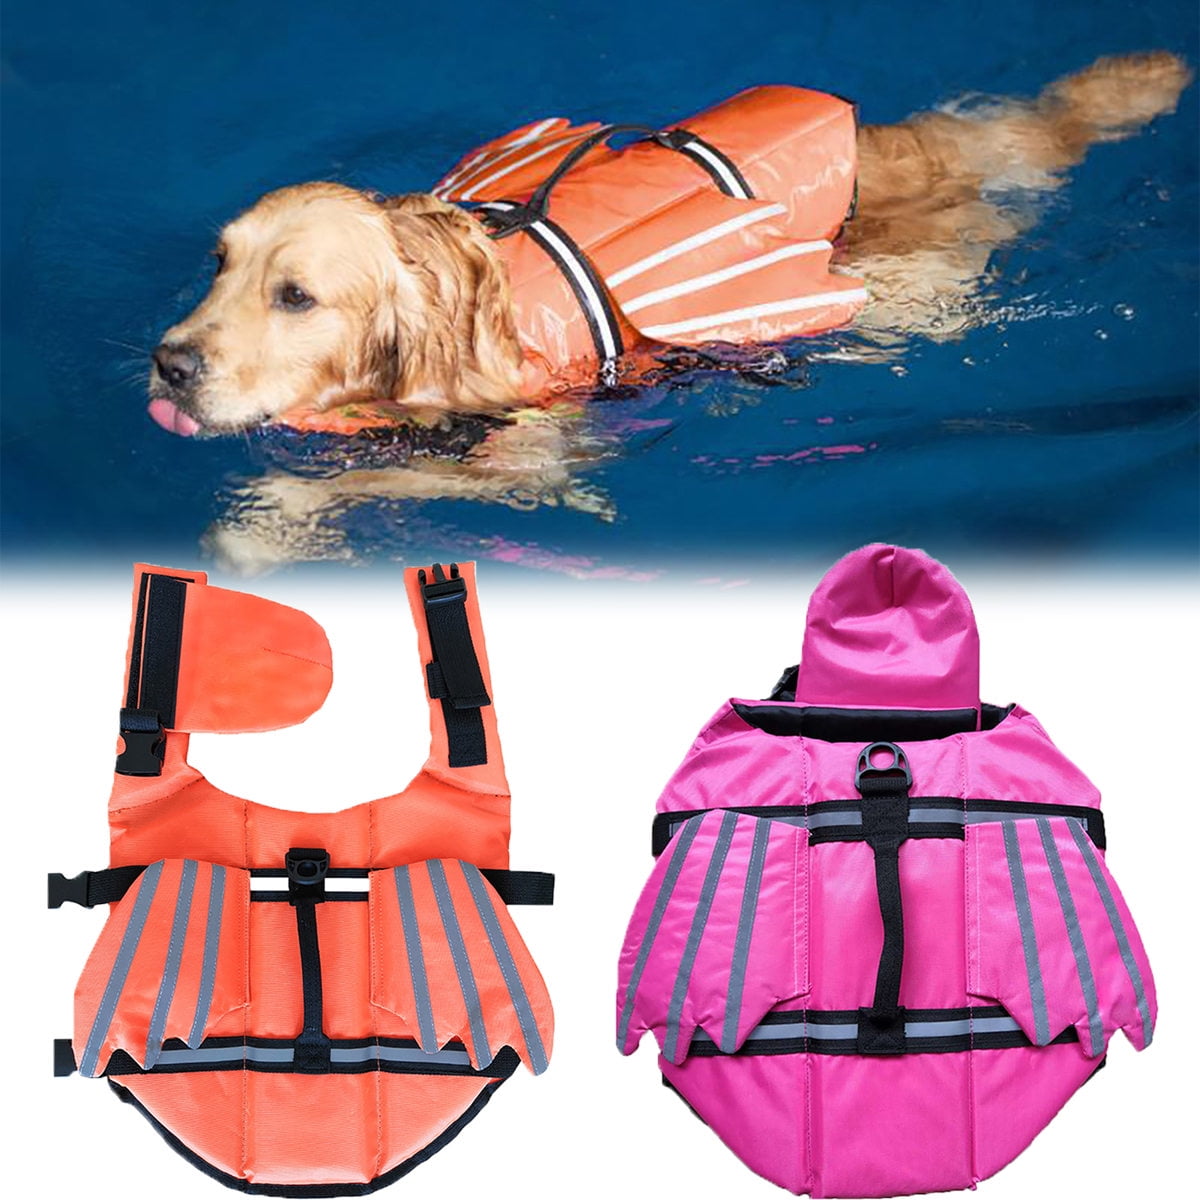 Reflective Pet Life Vest Preserver Adjustable Wing Lifesaver Swimsuit with Rescue Handle IDOMIK Dog Life Jacket for Small Medium Large Dogs Dog Flotation Jacket Coat for Beach Pool Boating Swimming